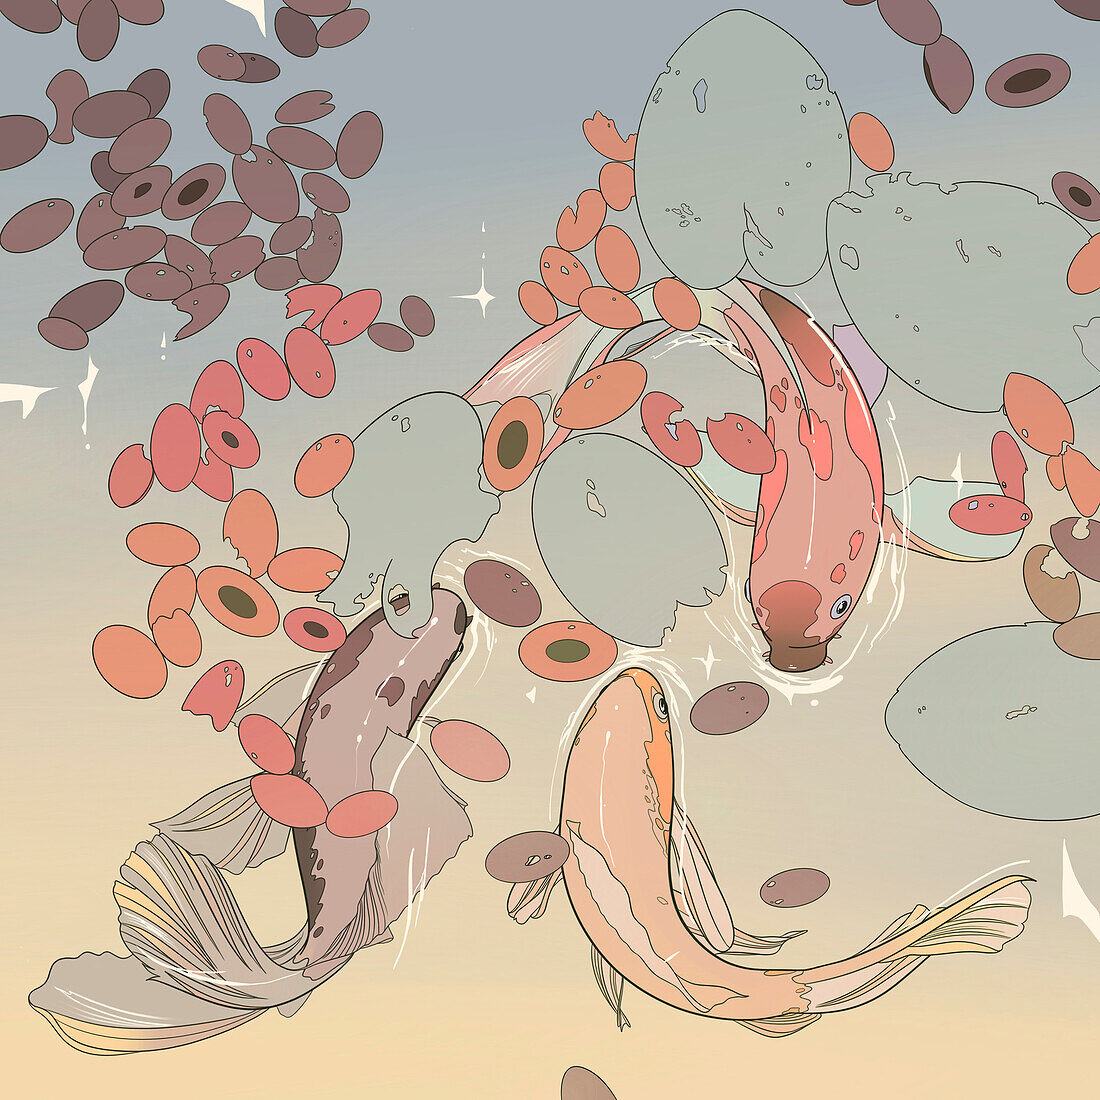 Koi fish swimming through lily pond, illustration